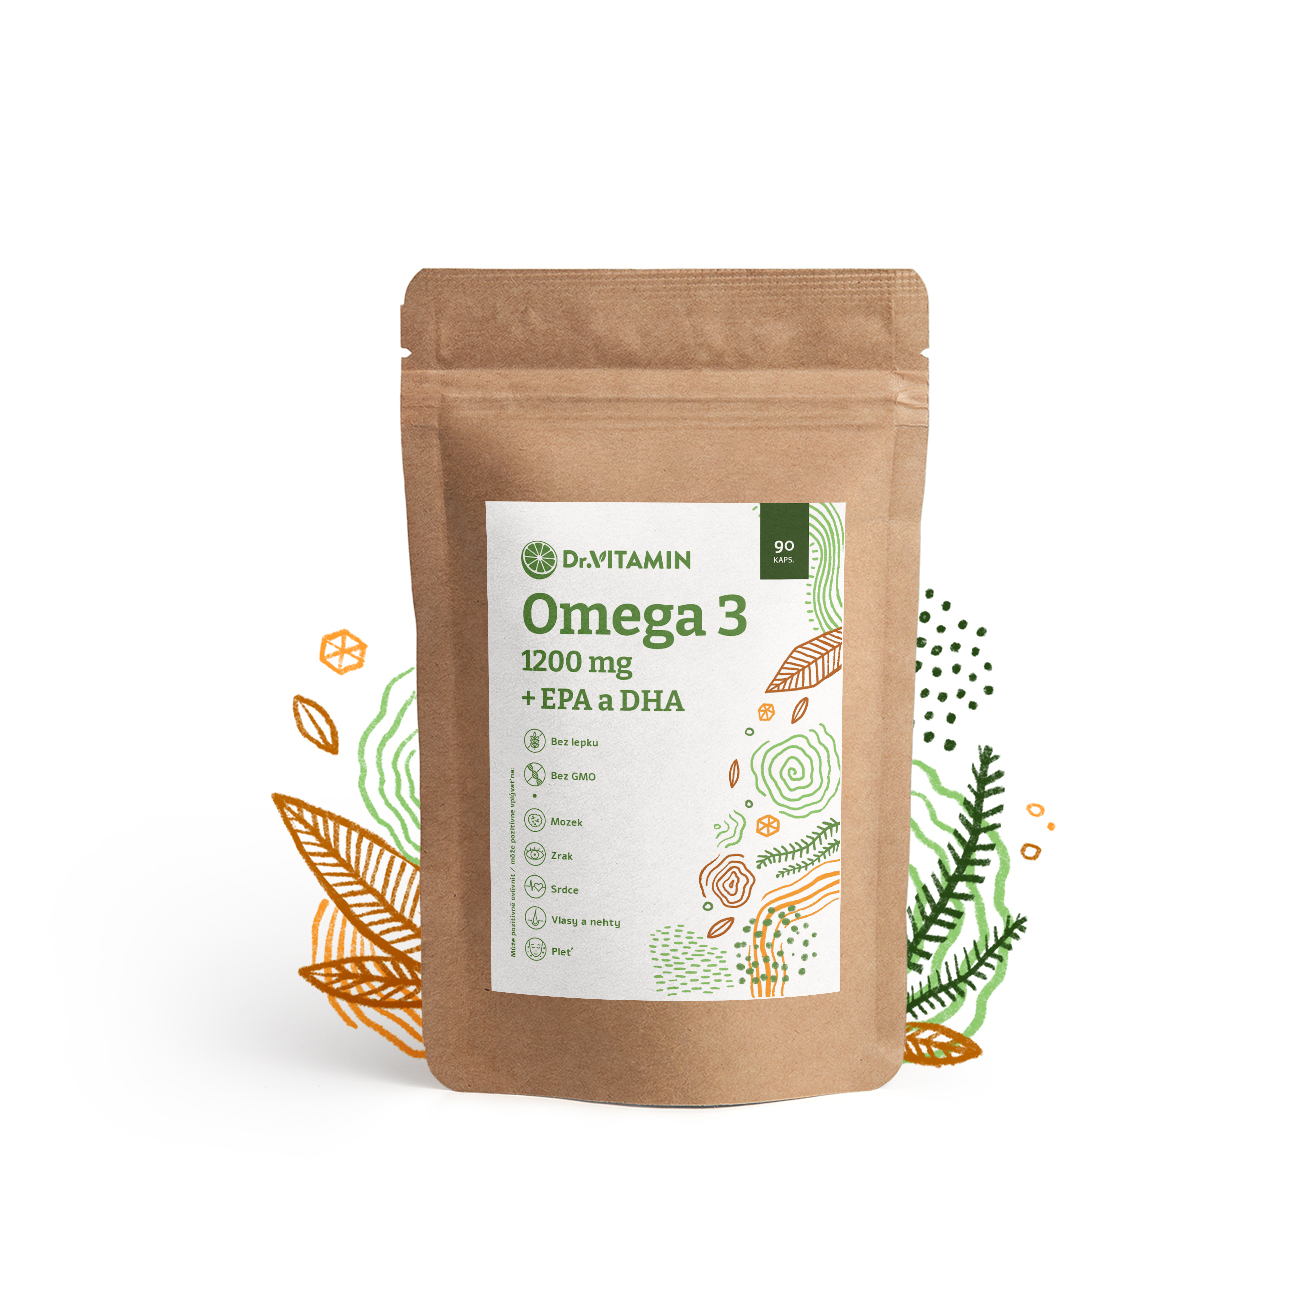 Omega 3 1200 mg + EPA a DHA - 90 kaps.